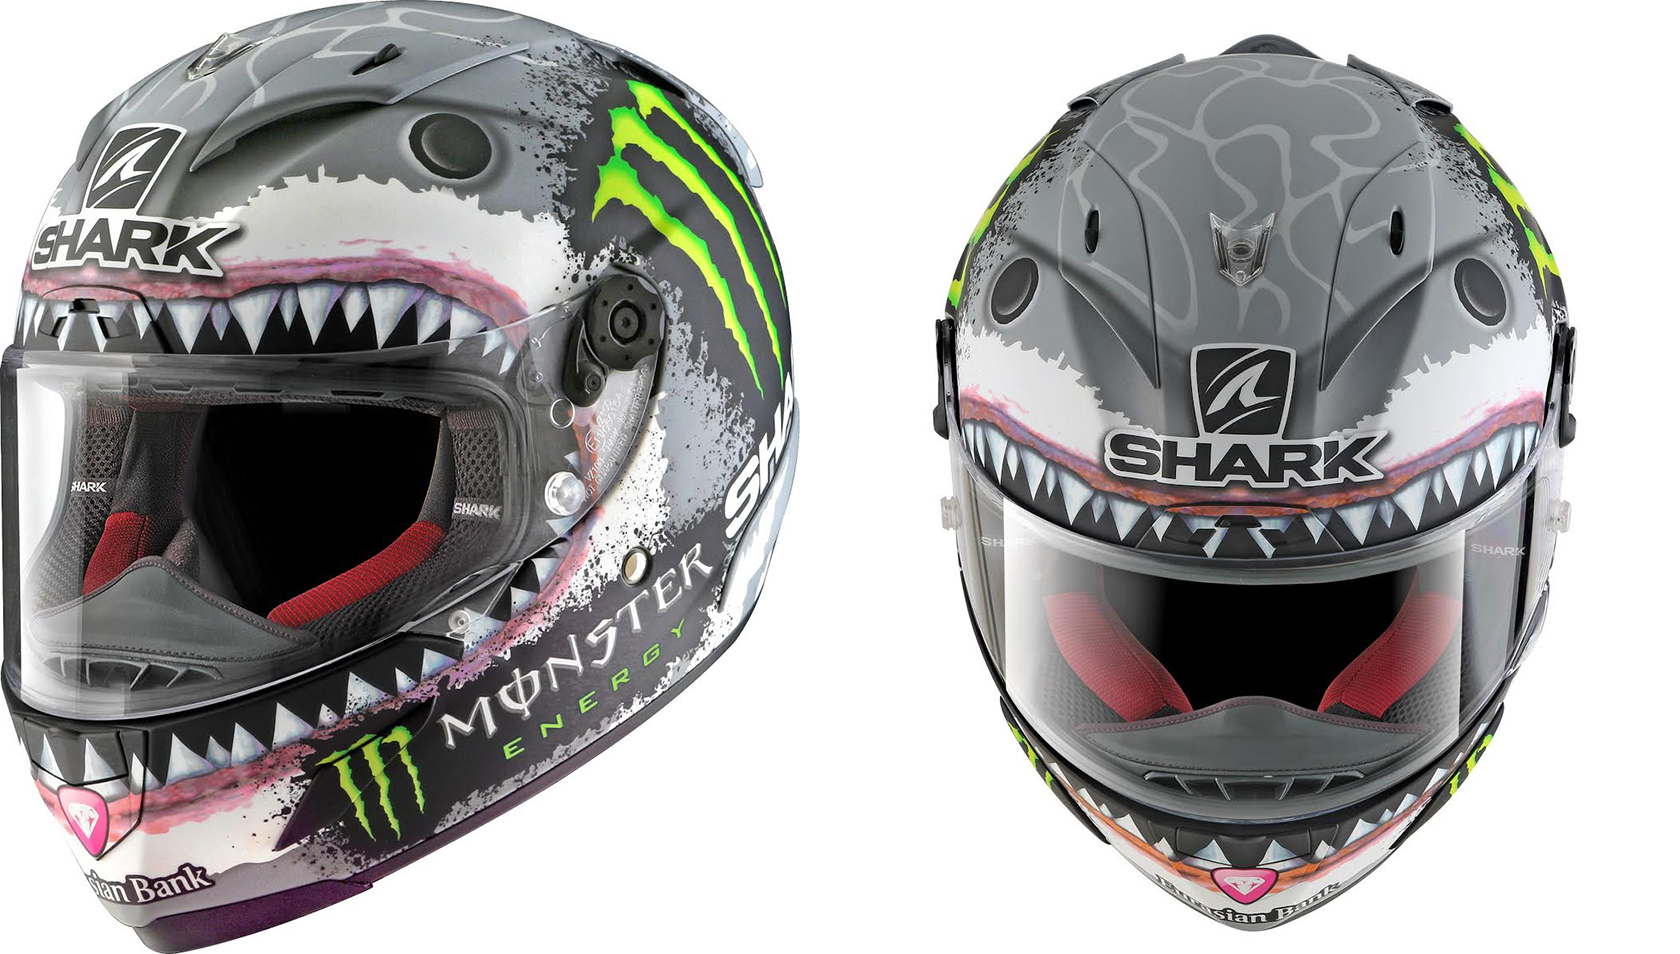 Shark pone a la venta el casco réplica White Shark de Jorge Lorenzo -  Formulamoto